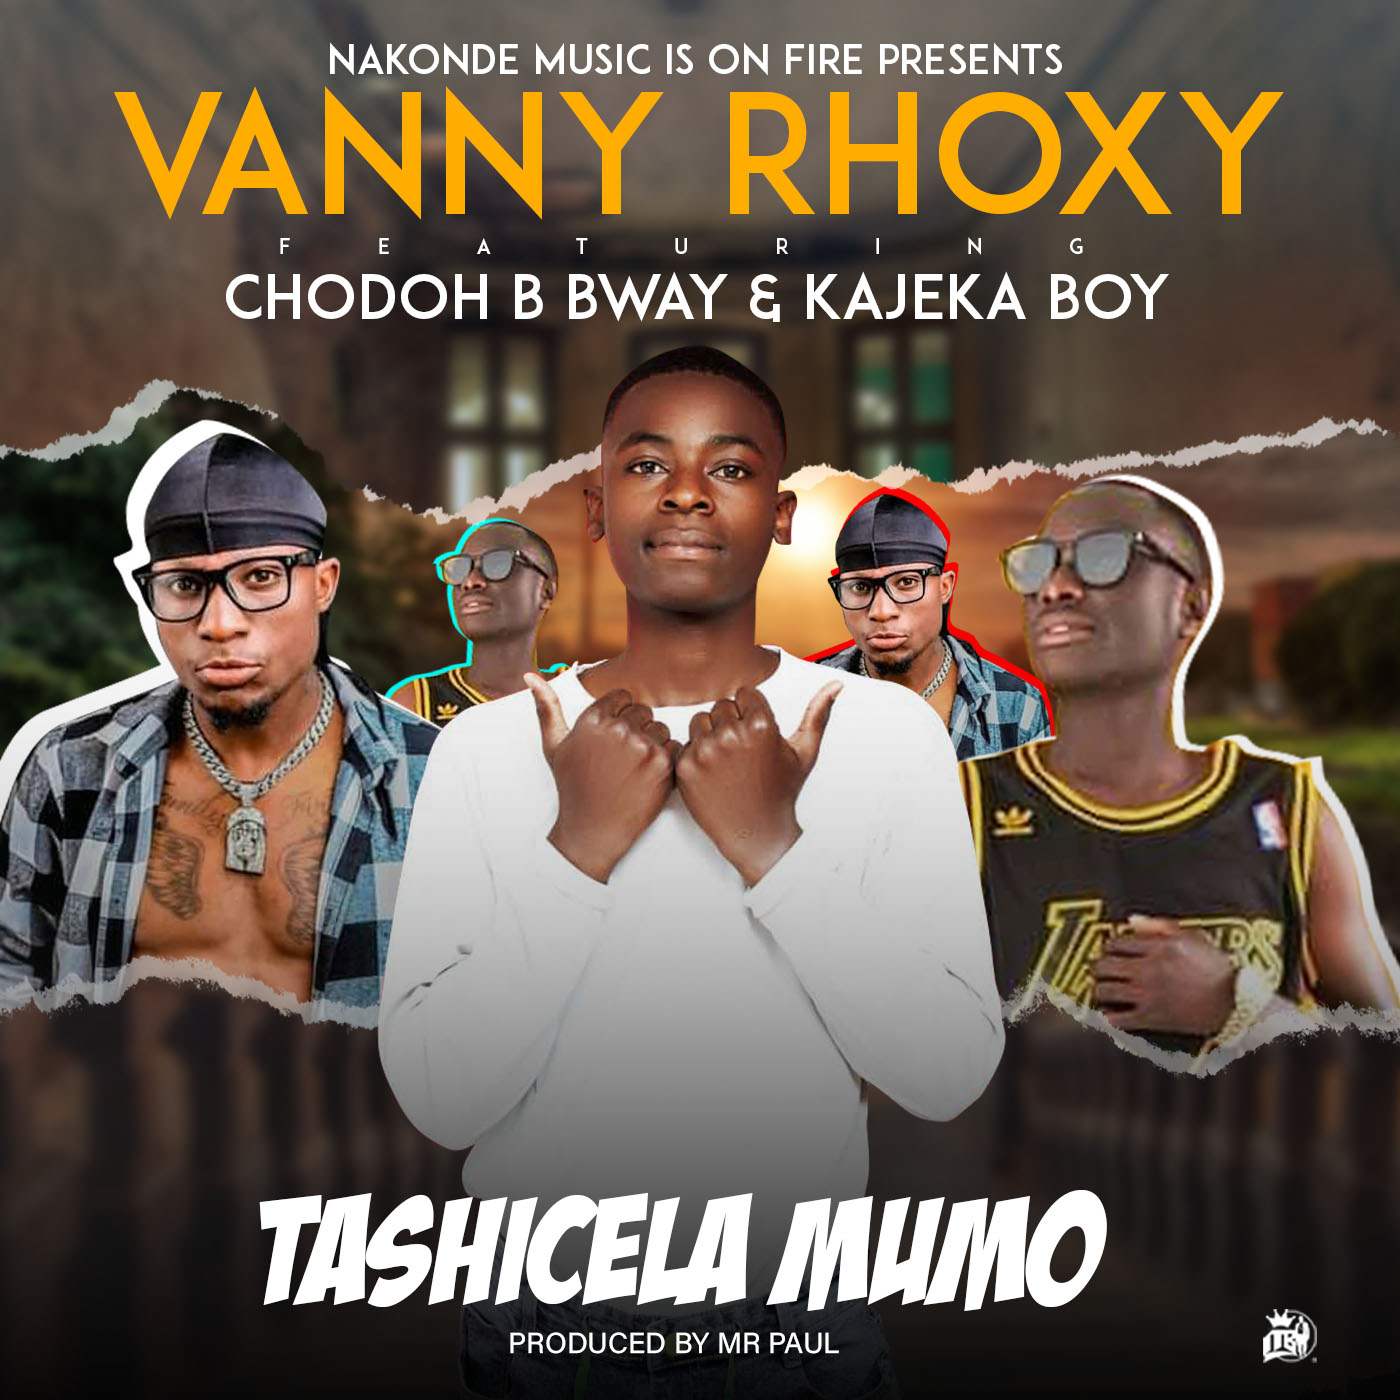 Vanny Rhoxy Ft Chodoh B Bway & Kajeka Boy - Tashicela Mumo